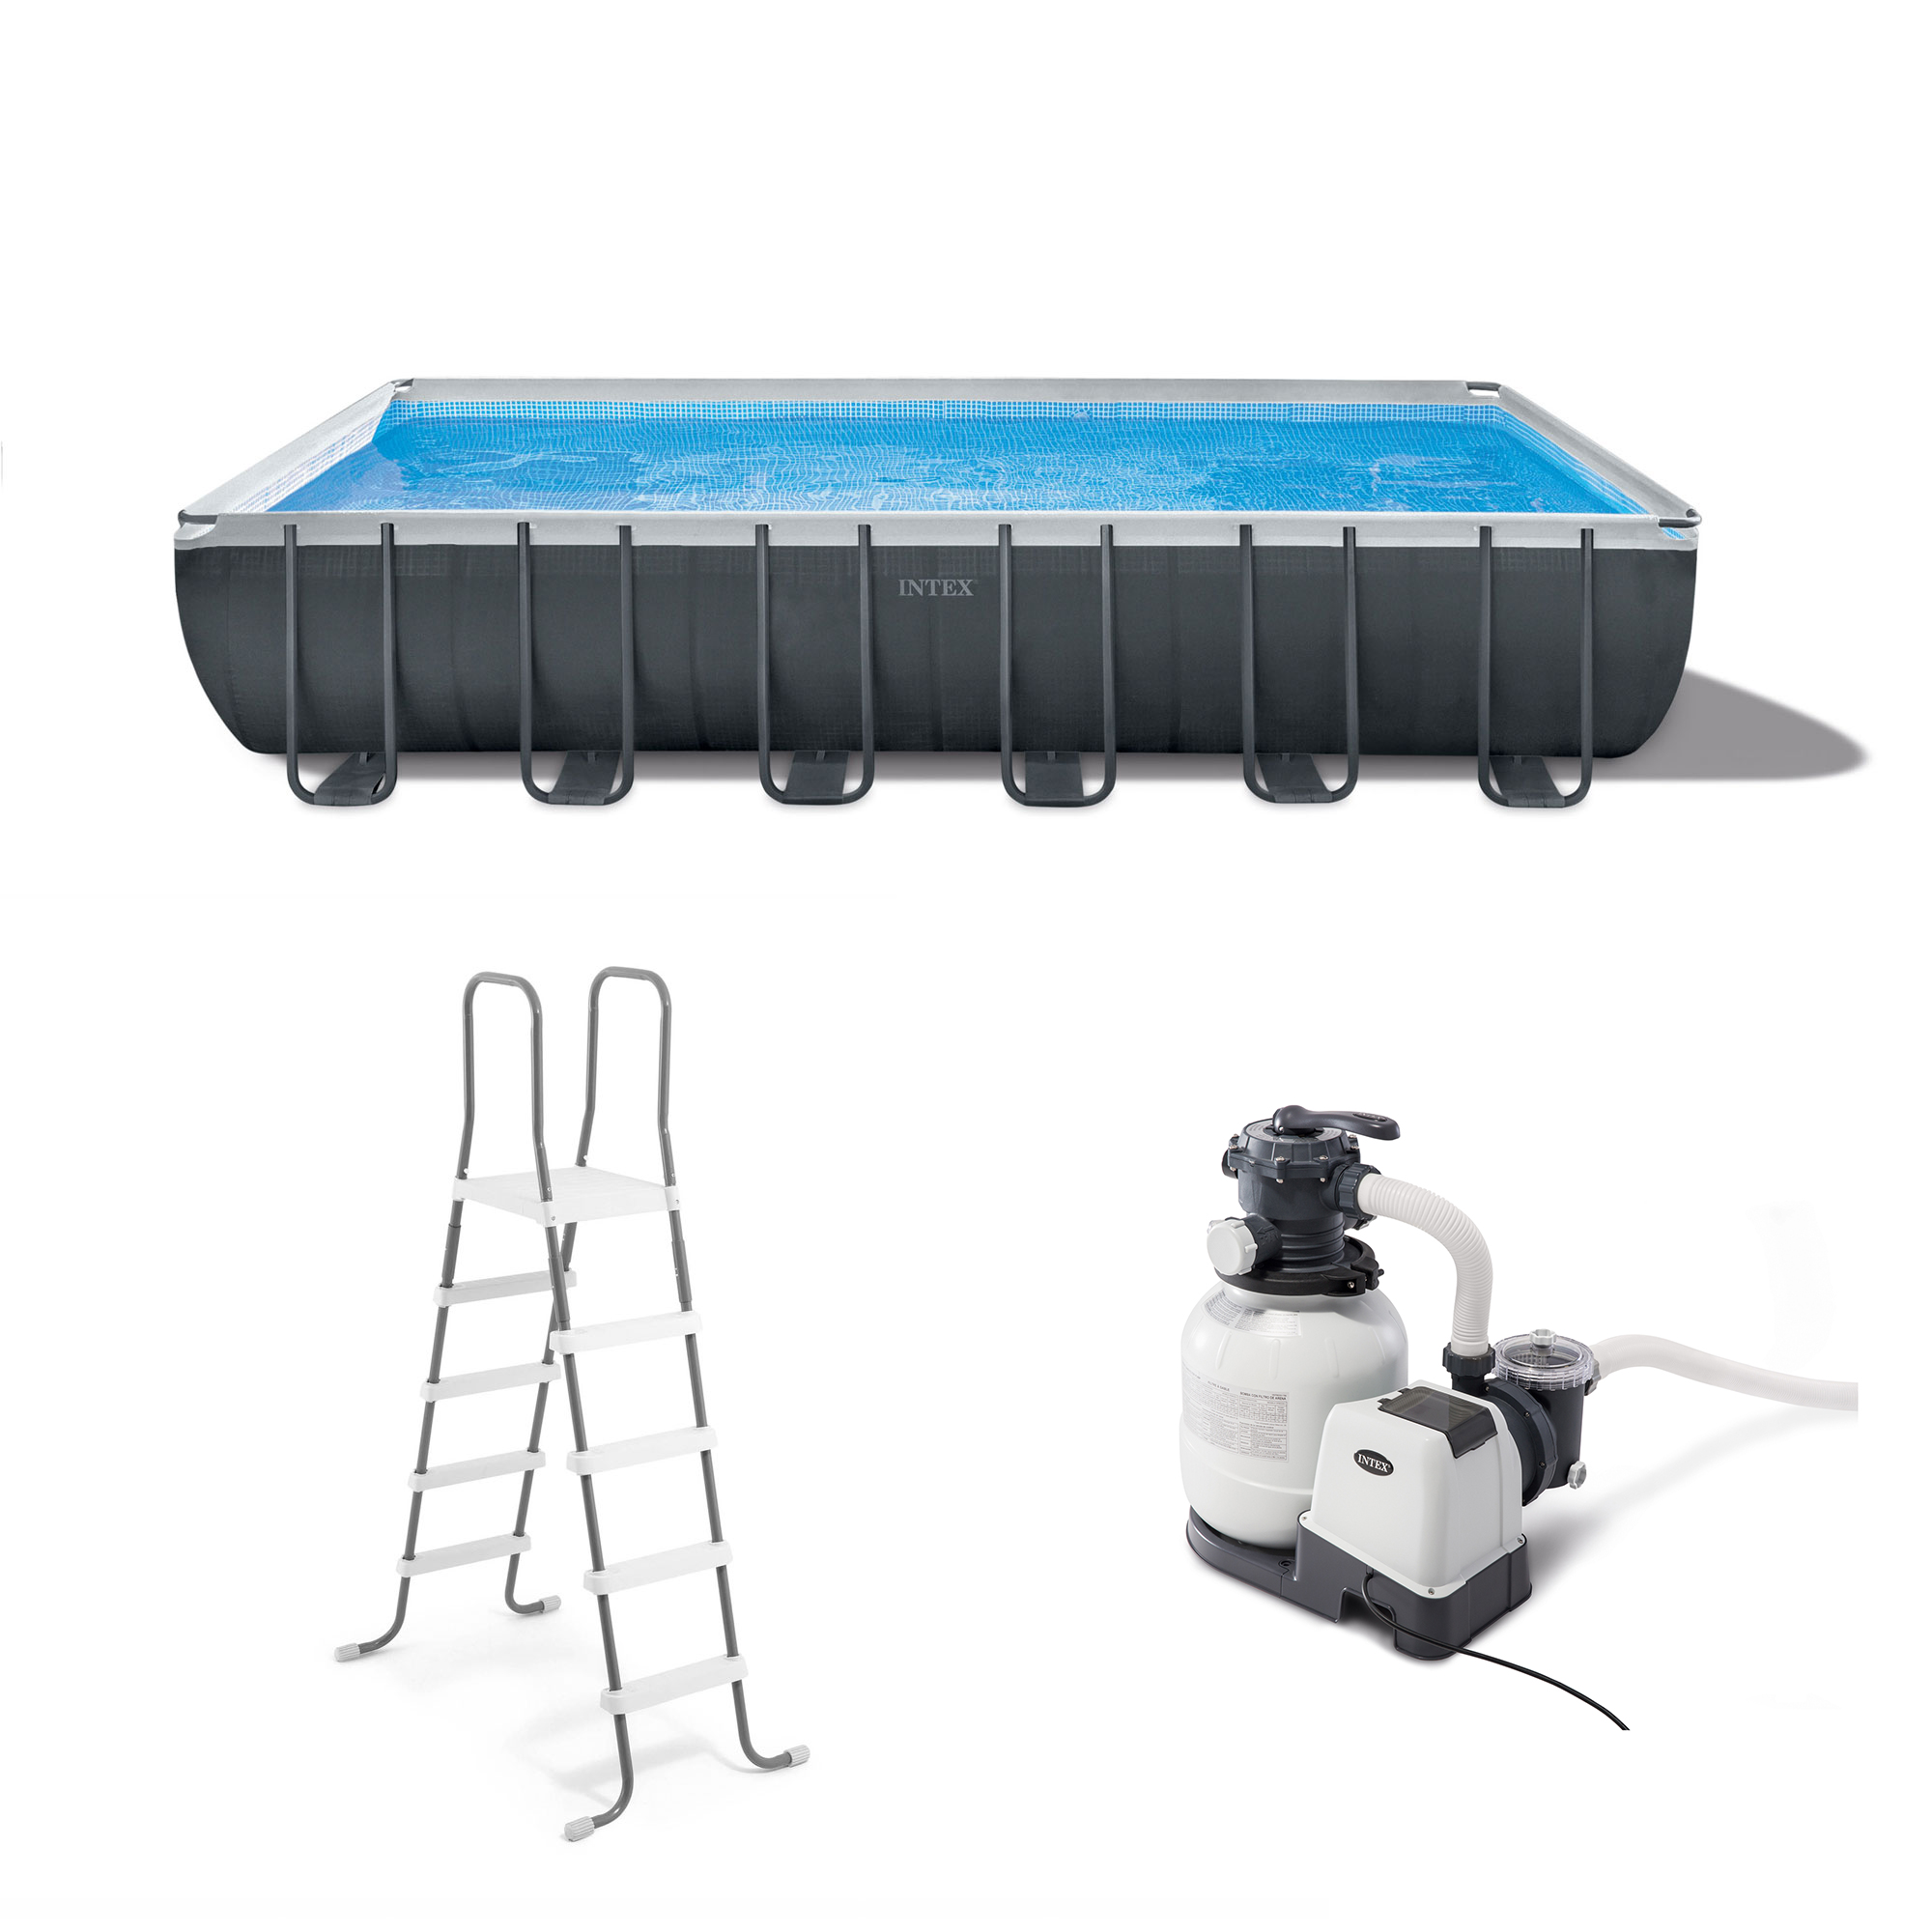 Intex 24' x 12' x 52" Ultra XTR Rectangular Frame Swimming Pool Set + Pump - image 1 of 10